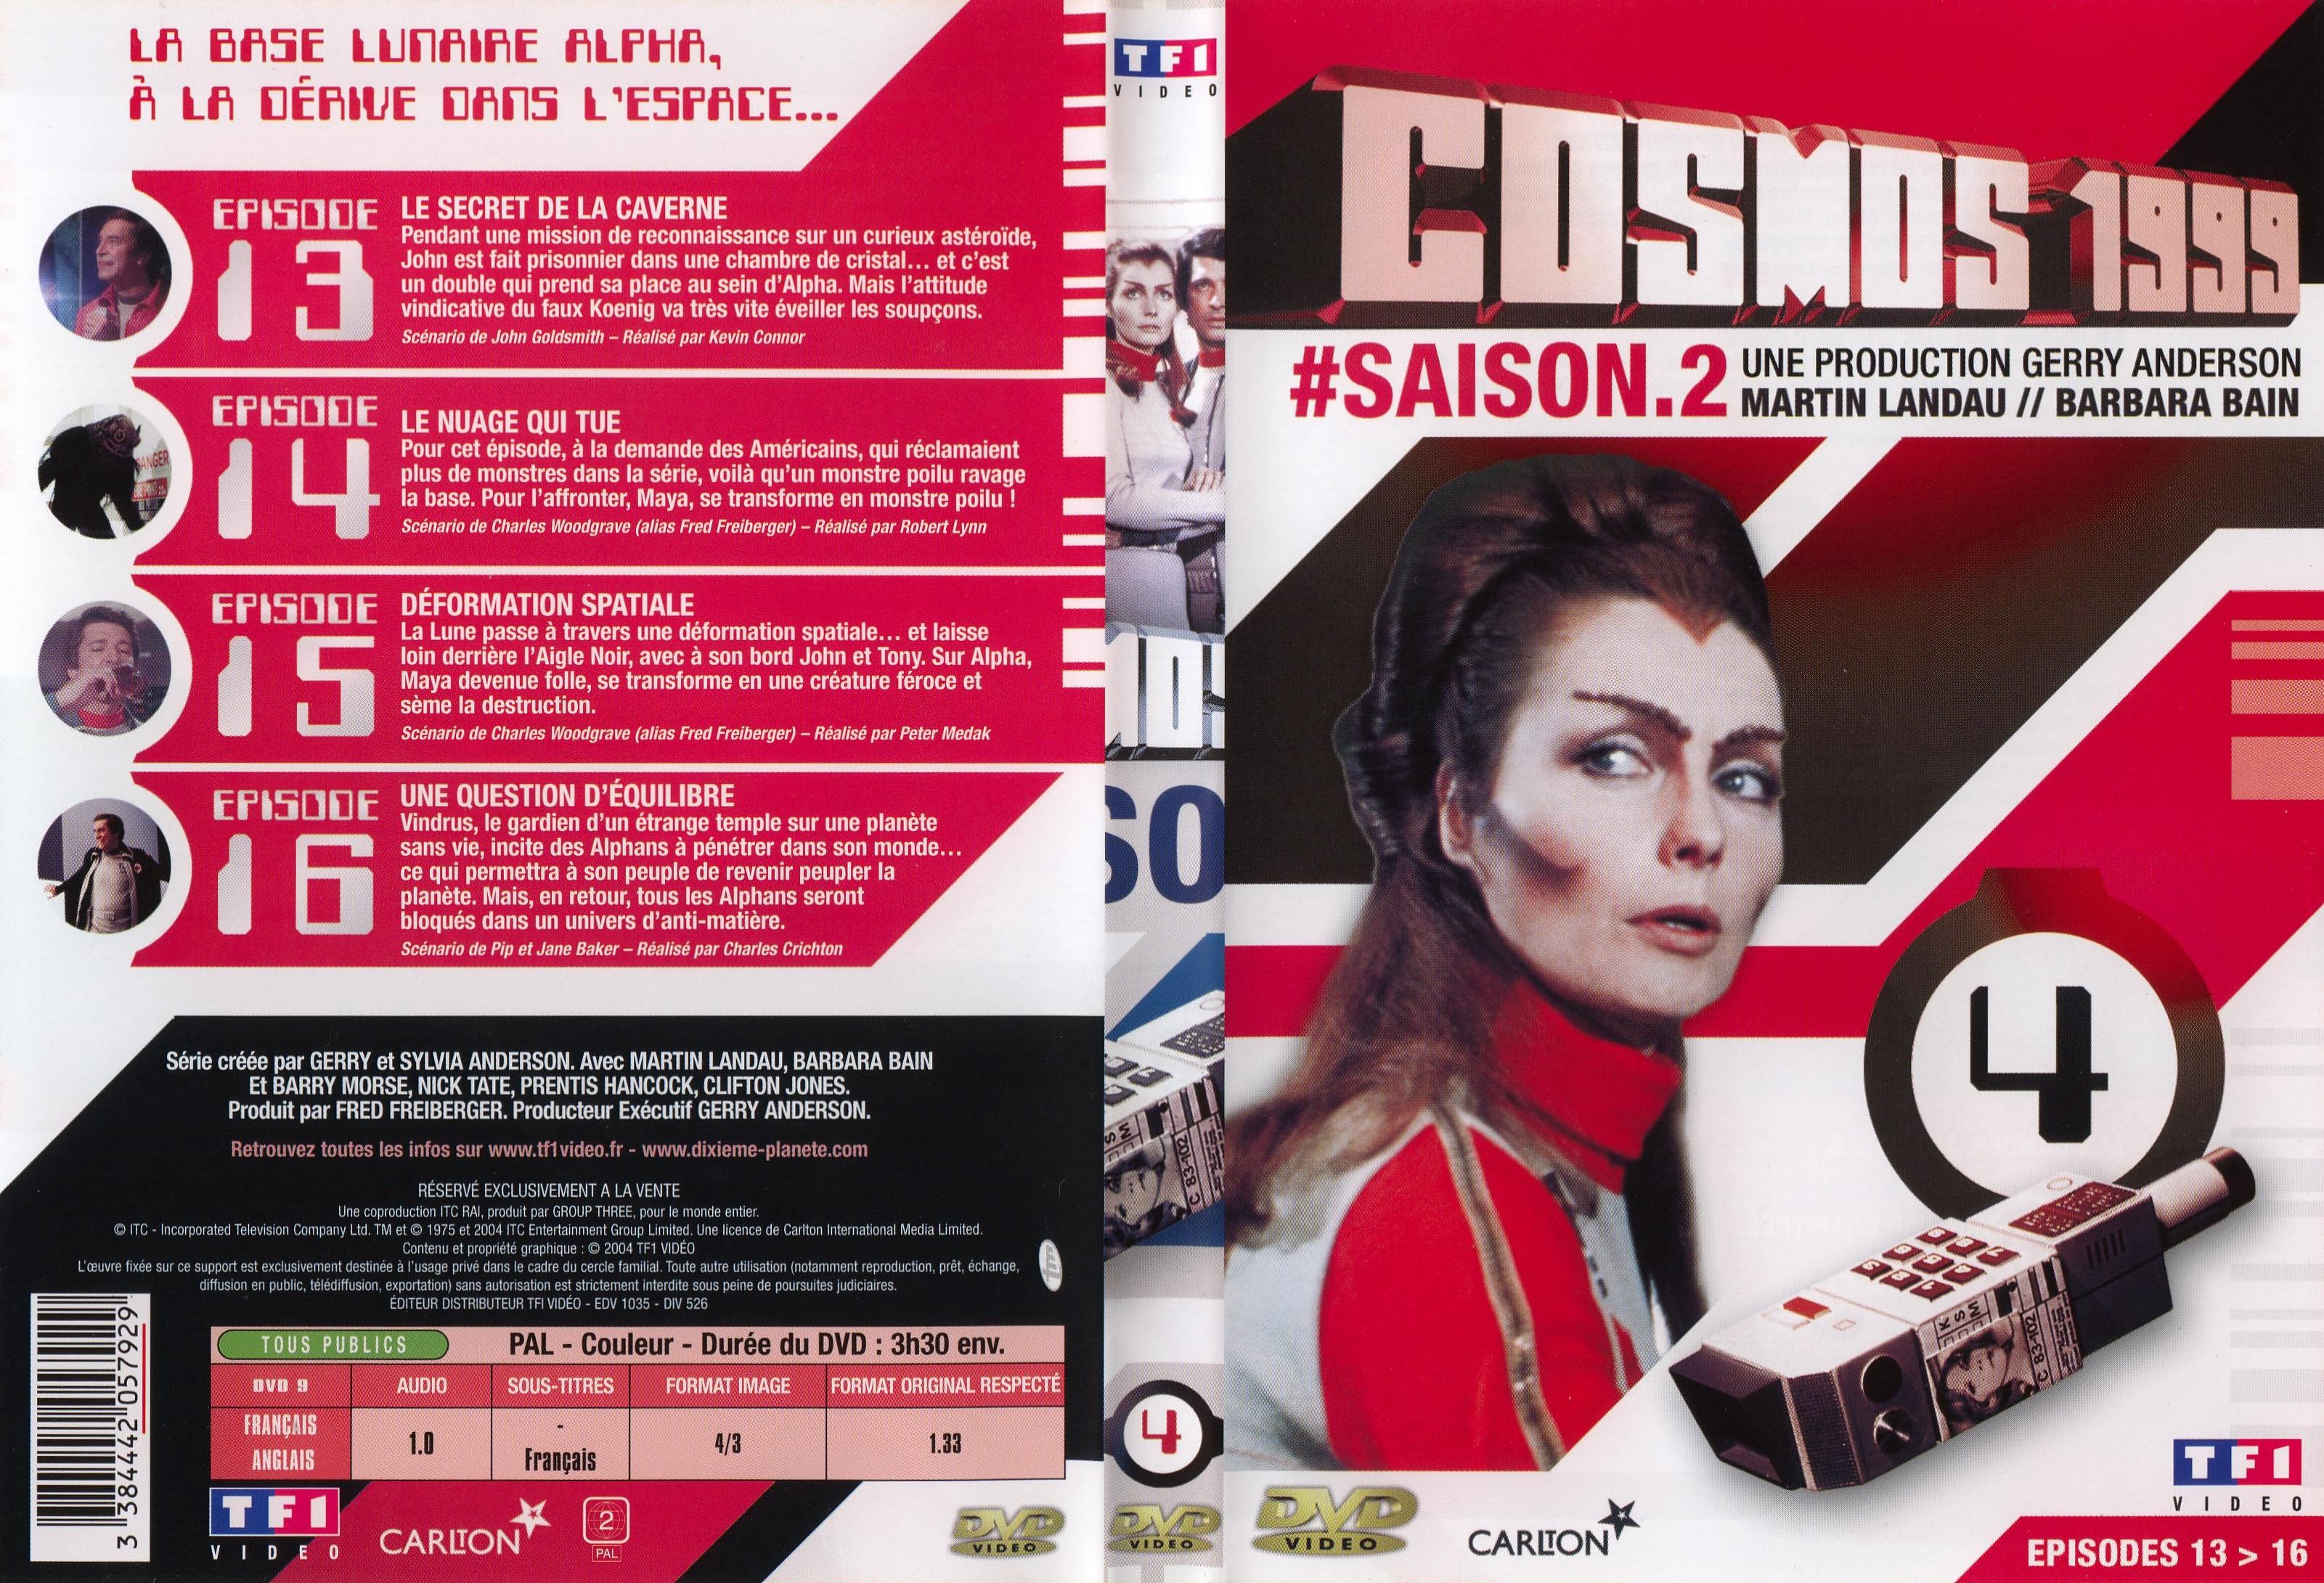 Jaquette DVD Cosmos 1999 saison 2 dvd 4